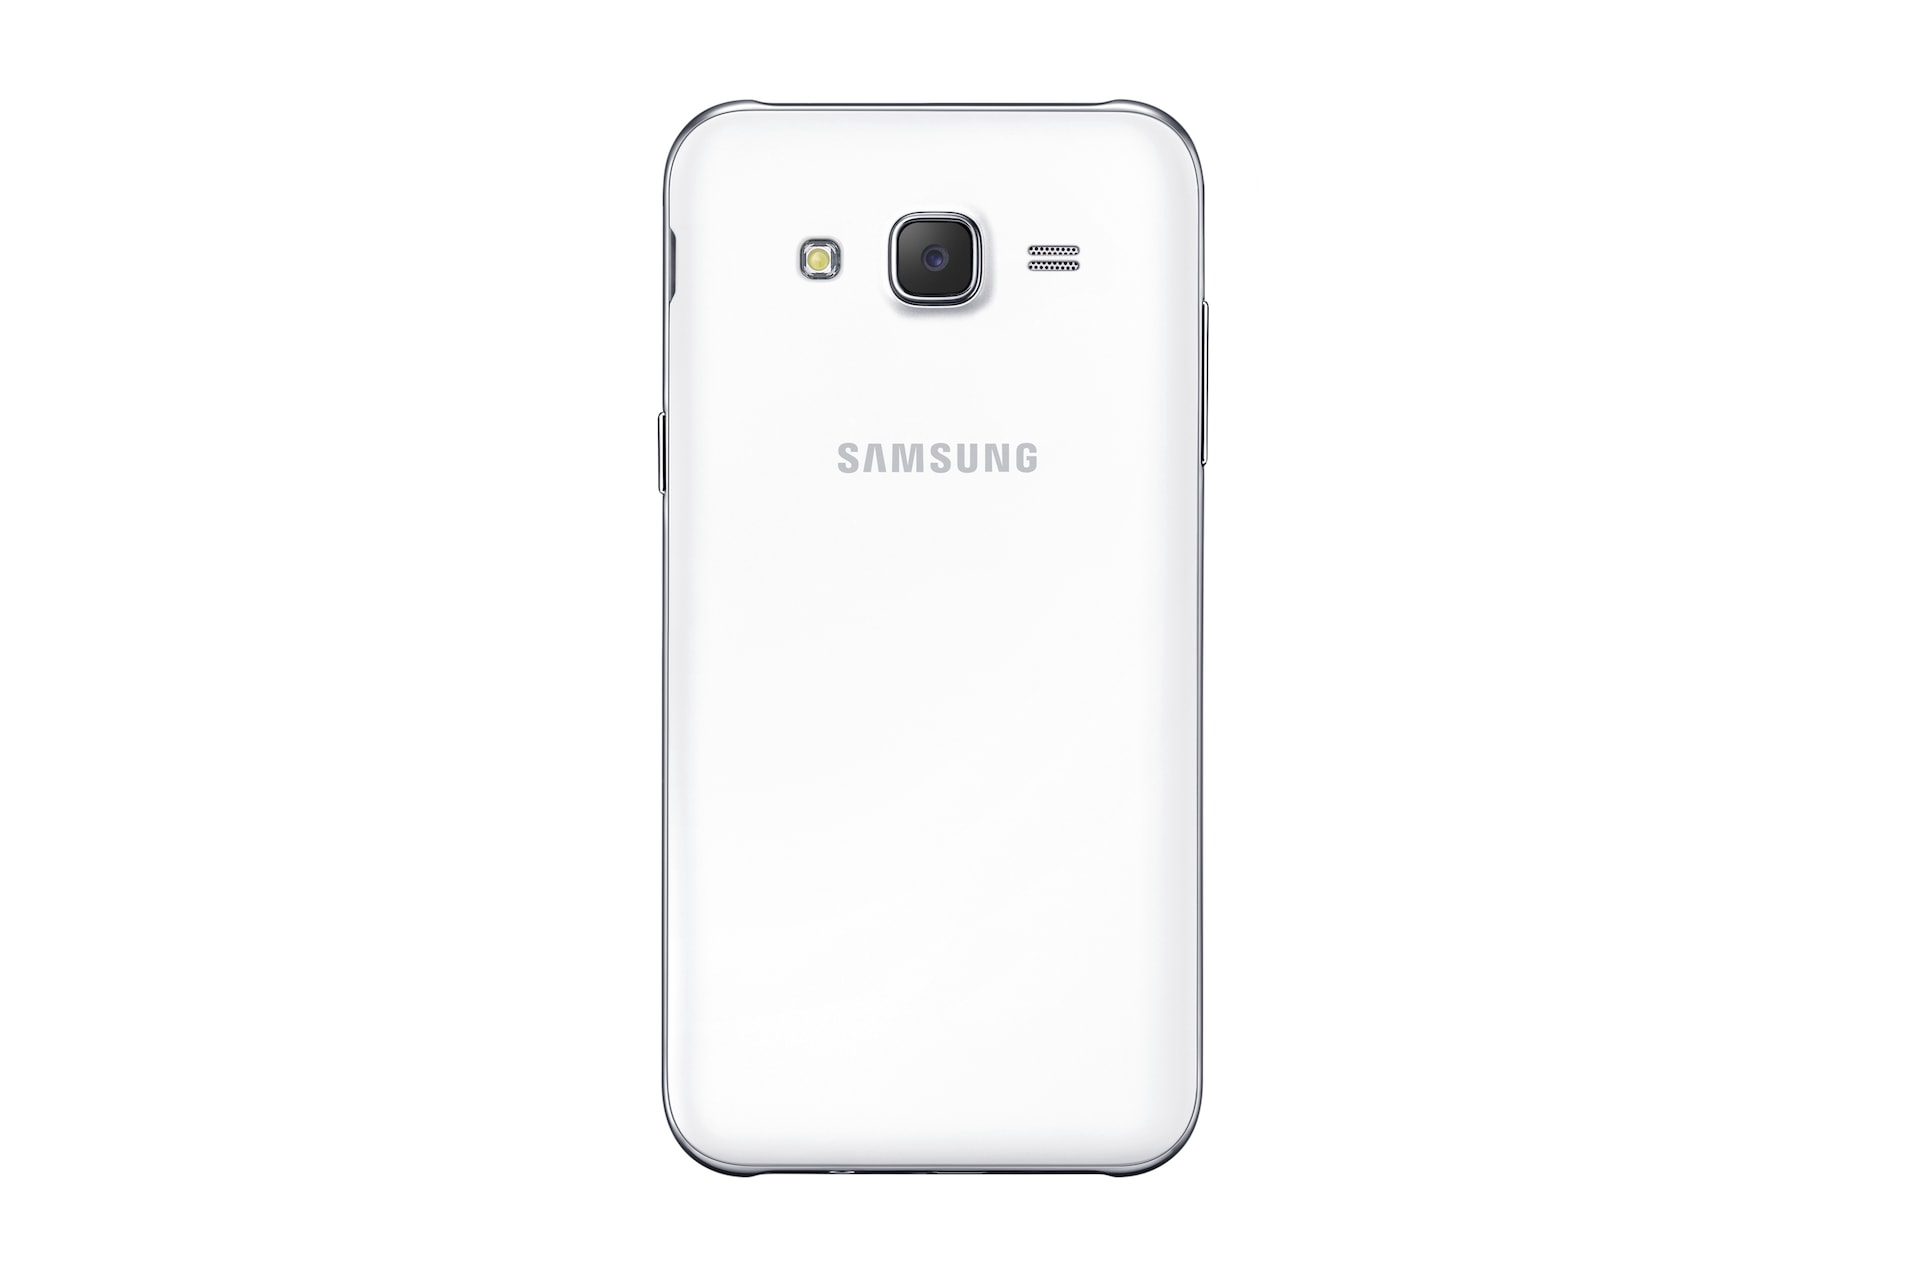 Samsung Galaxy J5 Price, New Galaxy J5 4G Dual Sim Smartphone, Features, Specs3000 x 2000